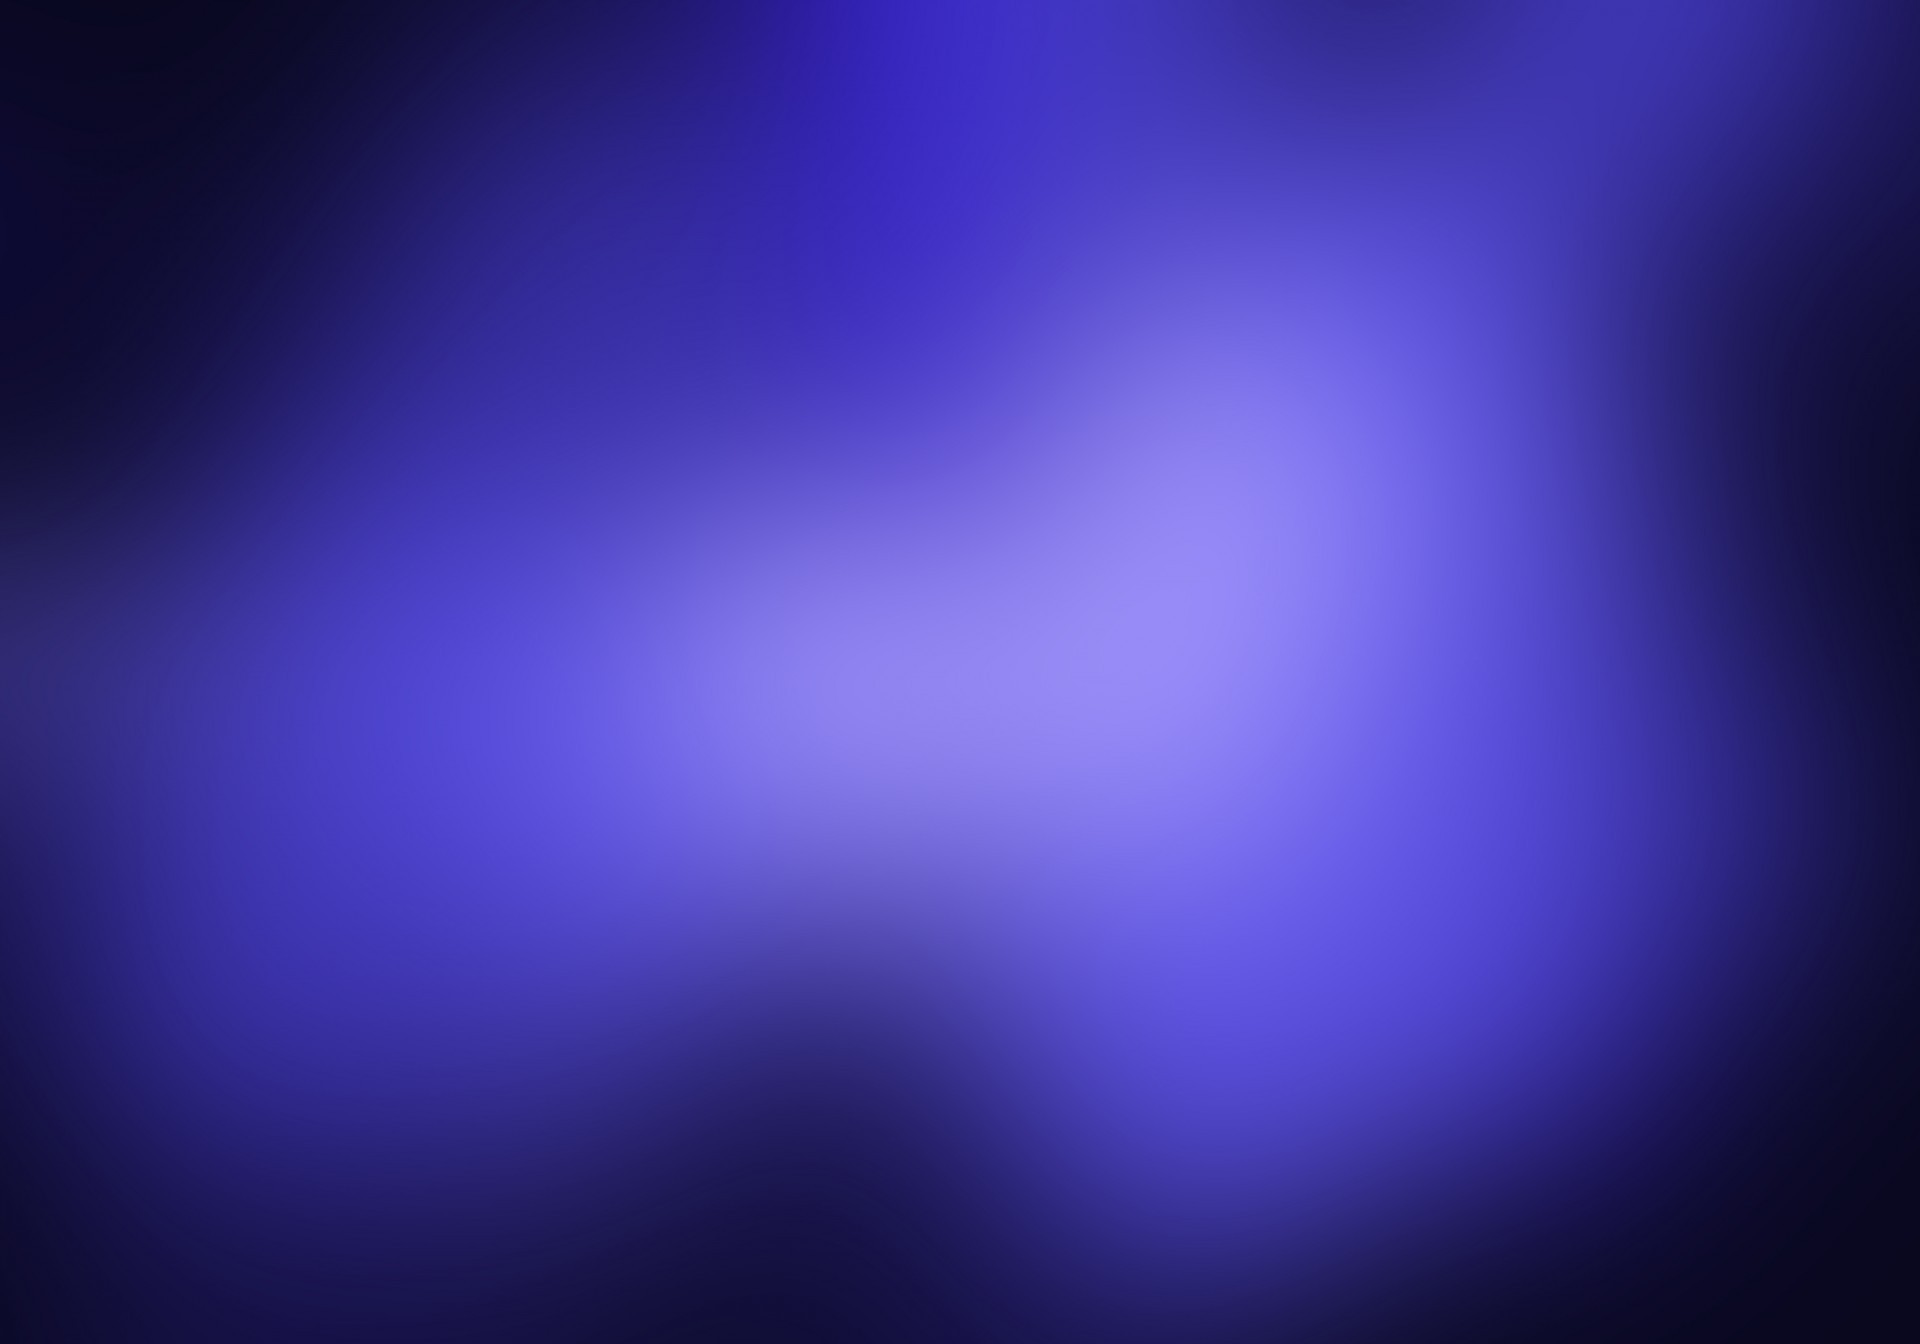 Blur background ·① Download free stunning full HD ...